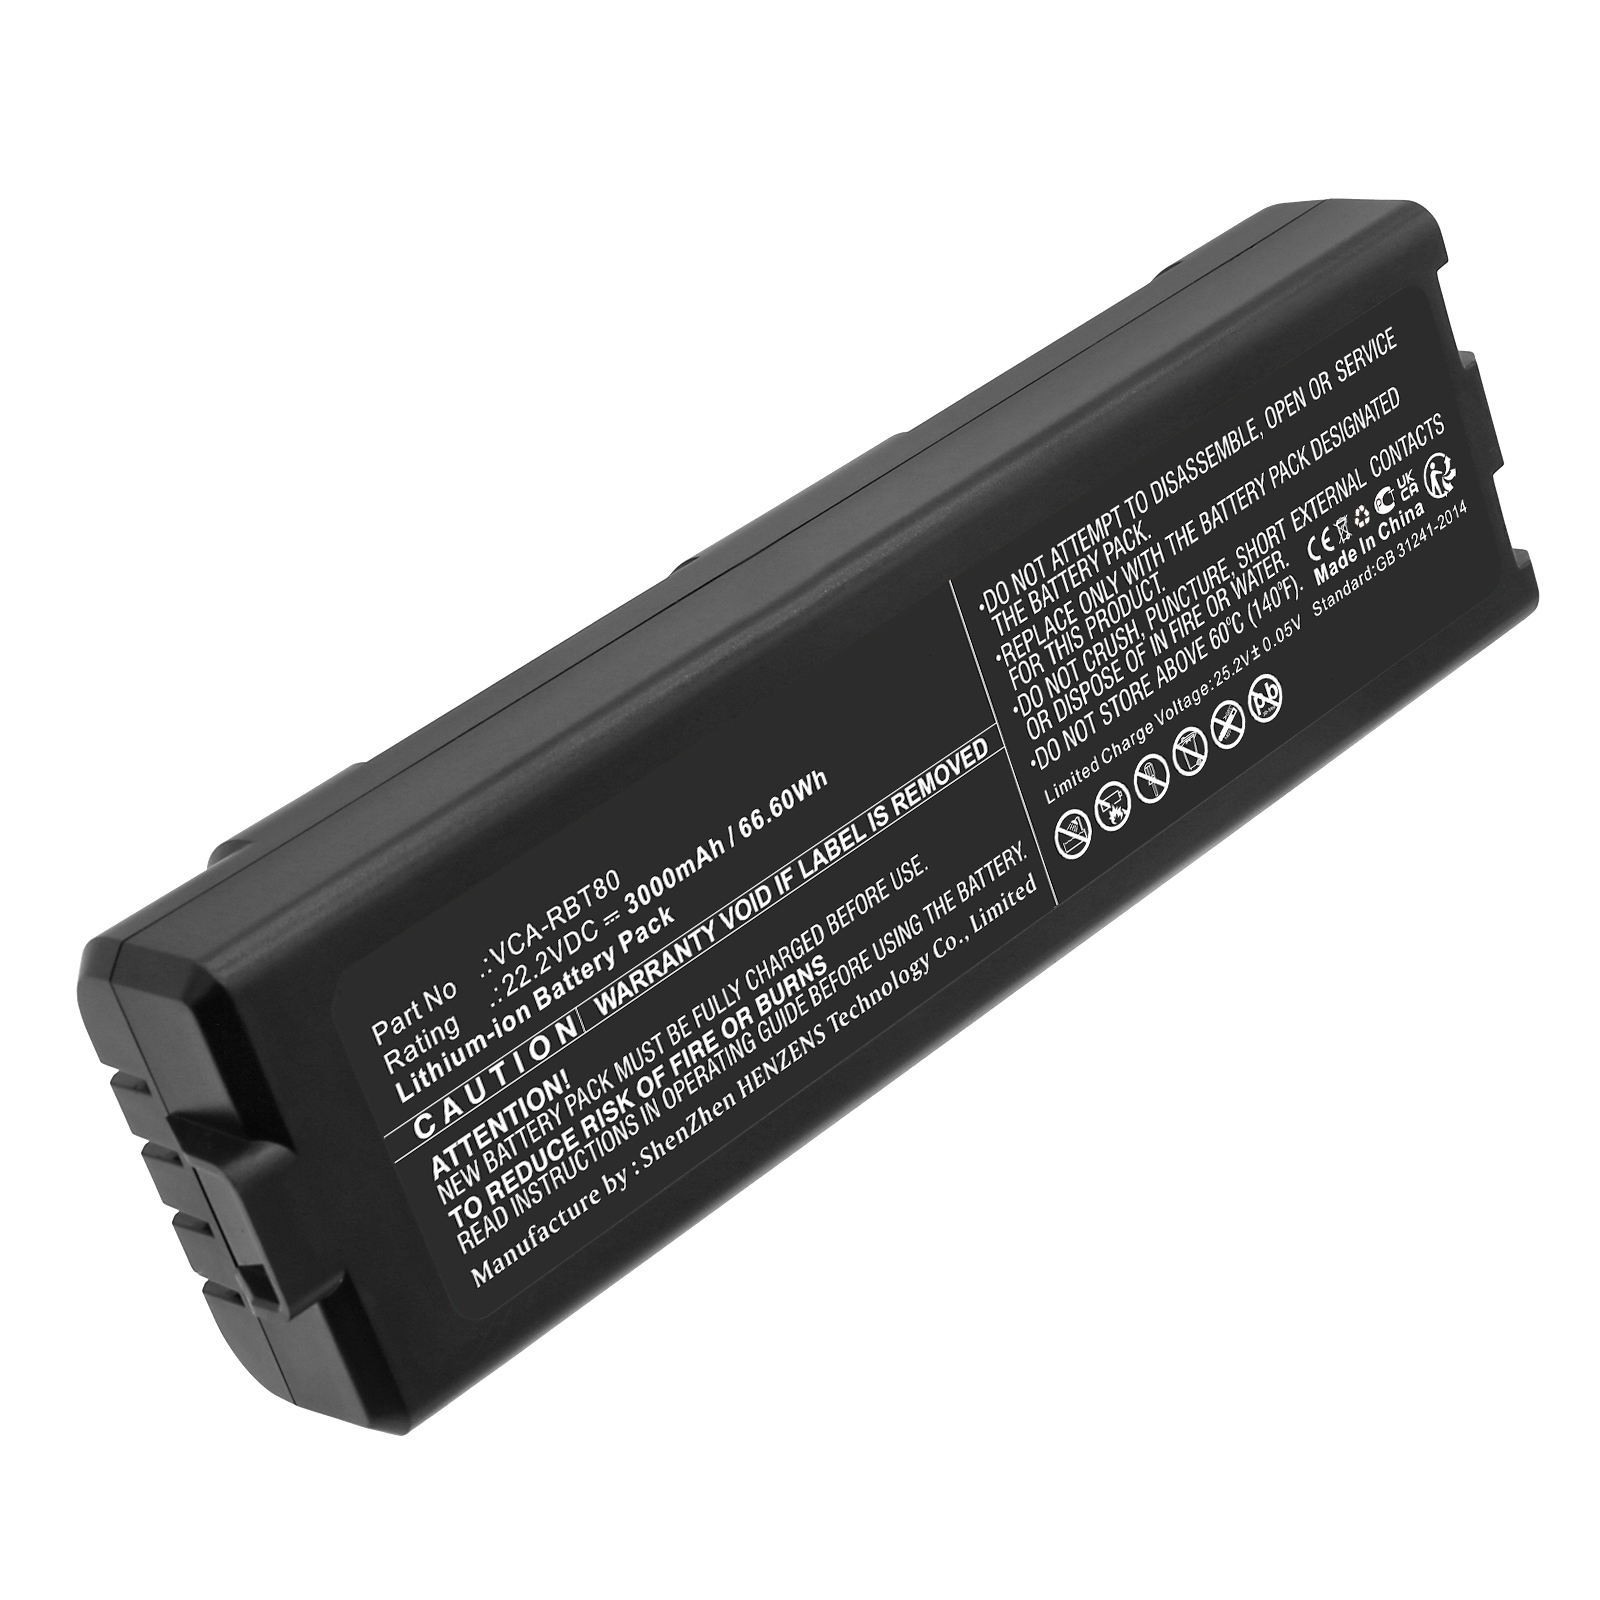 Synergy Digital Vacuum Cleaner Battery, Compatible with Samsung VCA-RBT80 Vacuum Cleaner Battery (Li-ion, 22.2V, 3000mAh)